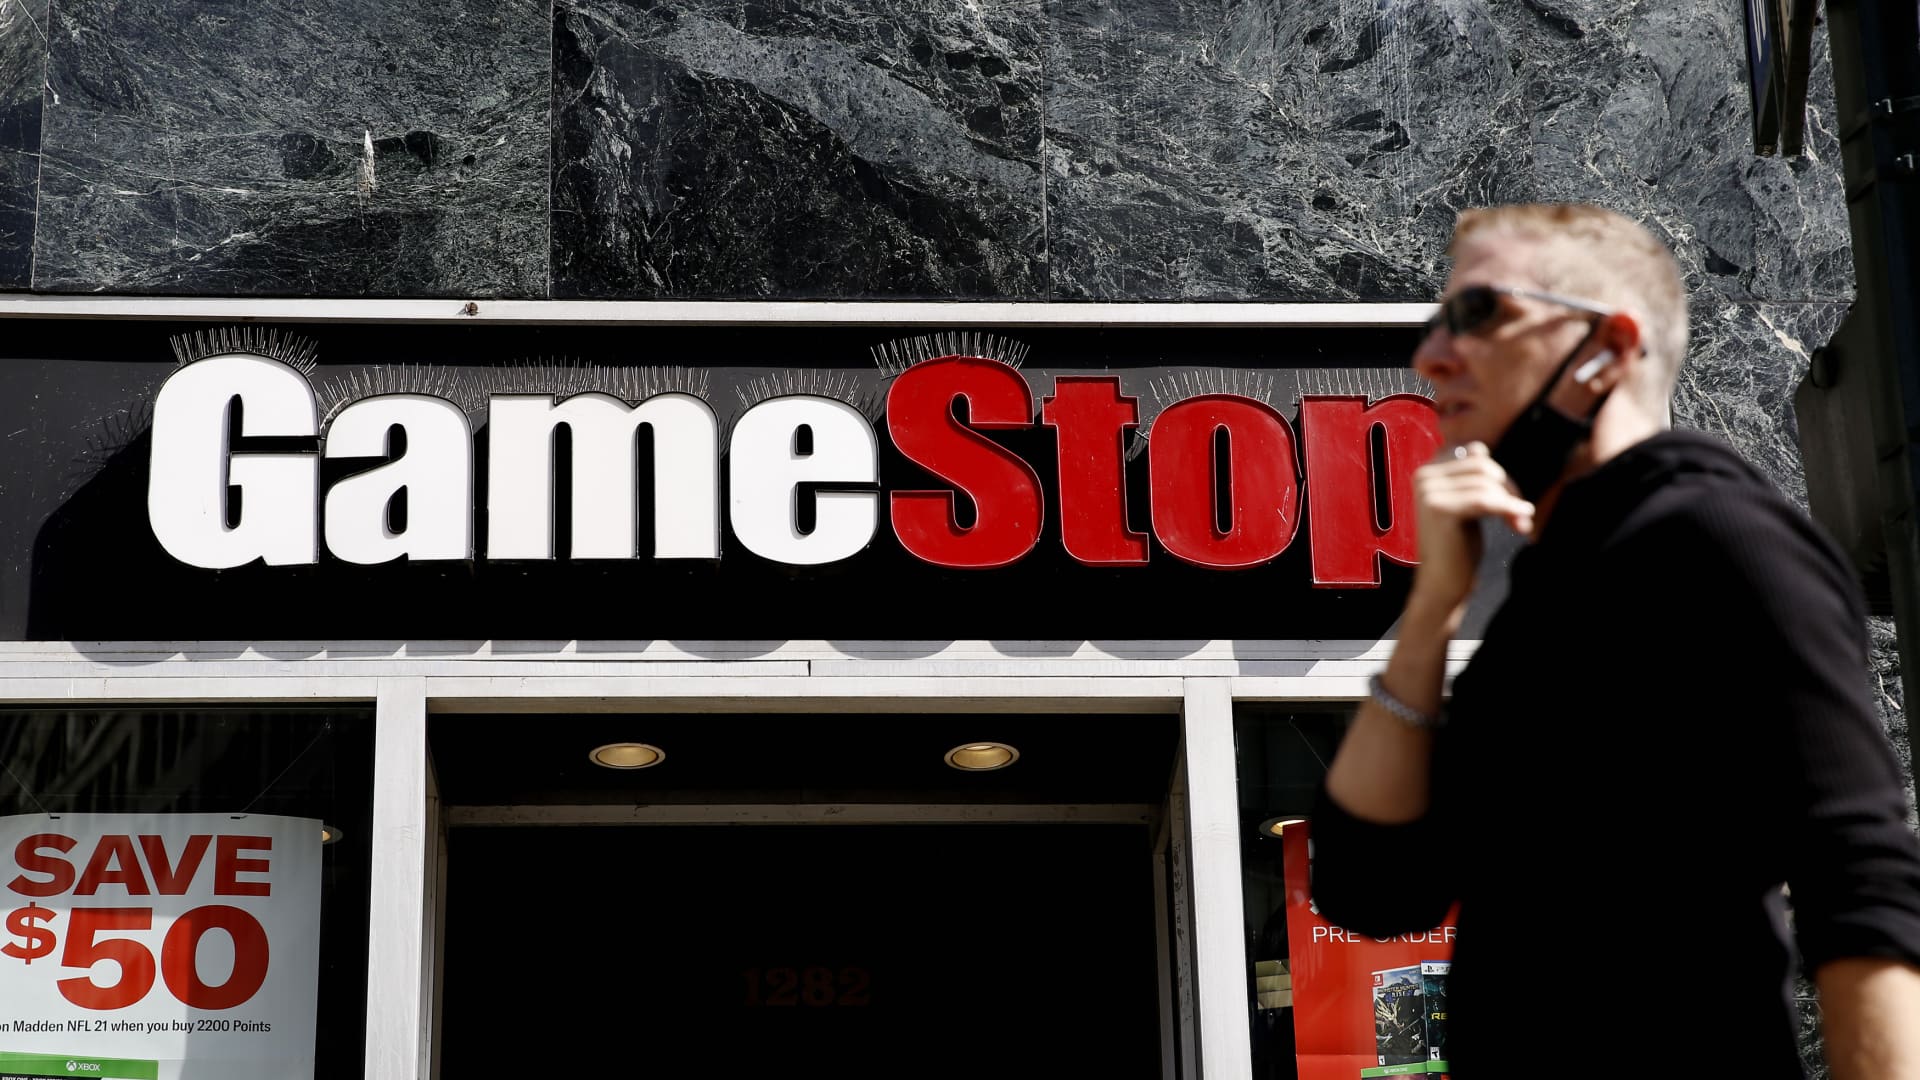 GameStop shares jump 30% as trader 'Roaring Kitty' who drove meme craze posts again